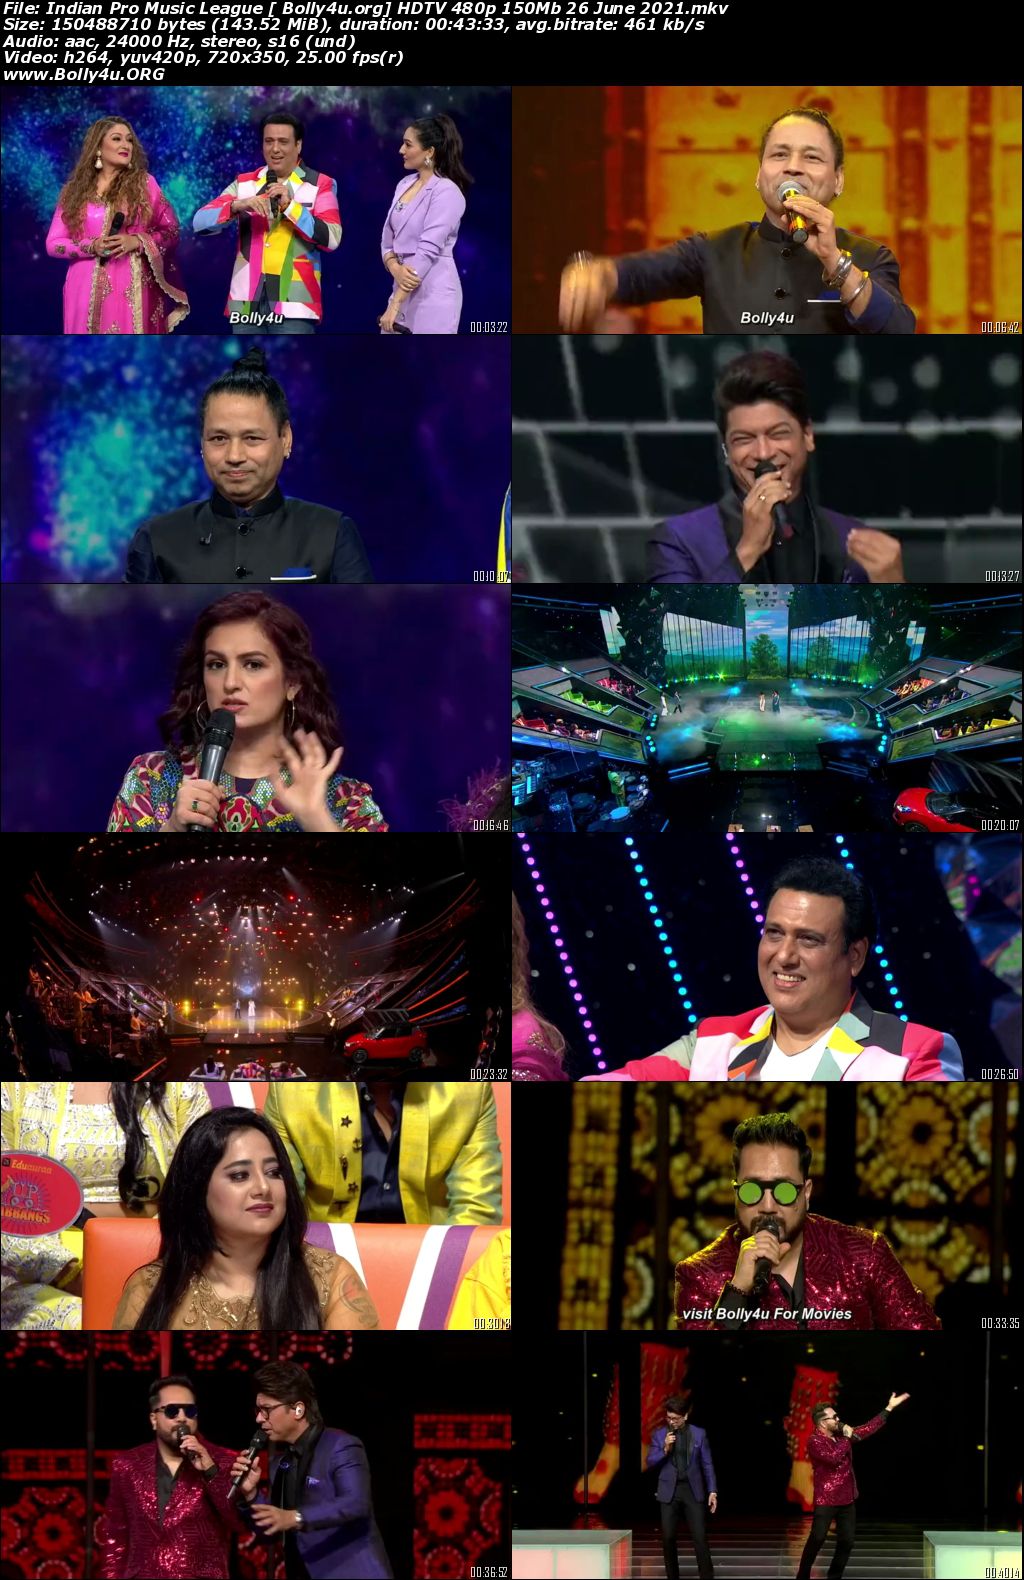 Indian Pro Music League HDTV 480p 150Mb 26 June 2021 Download